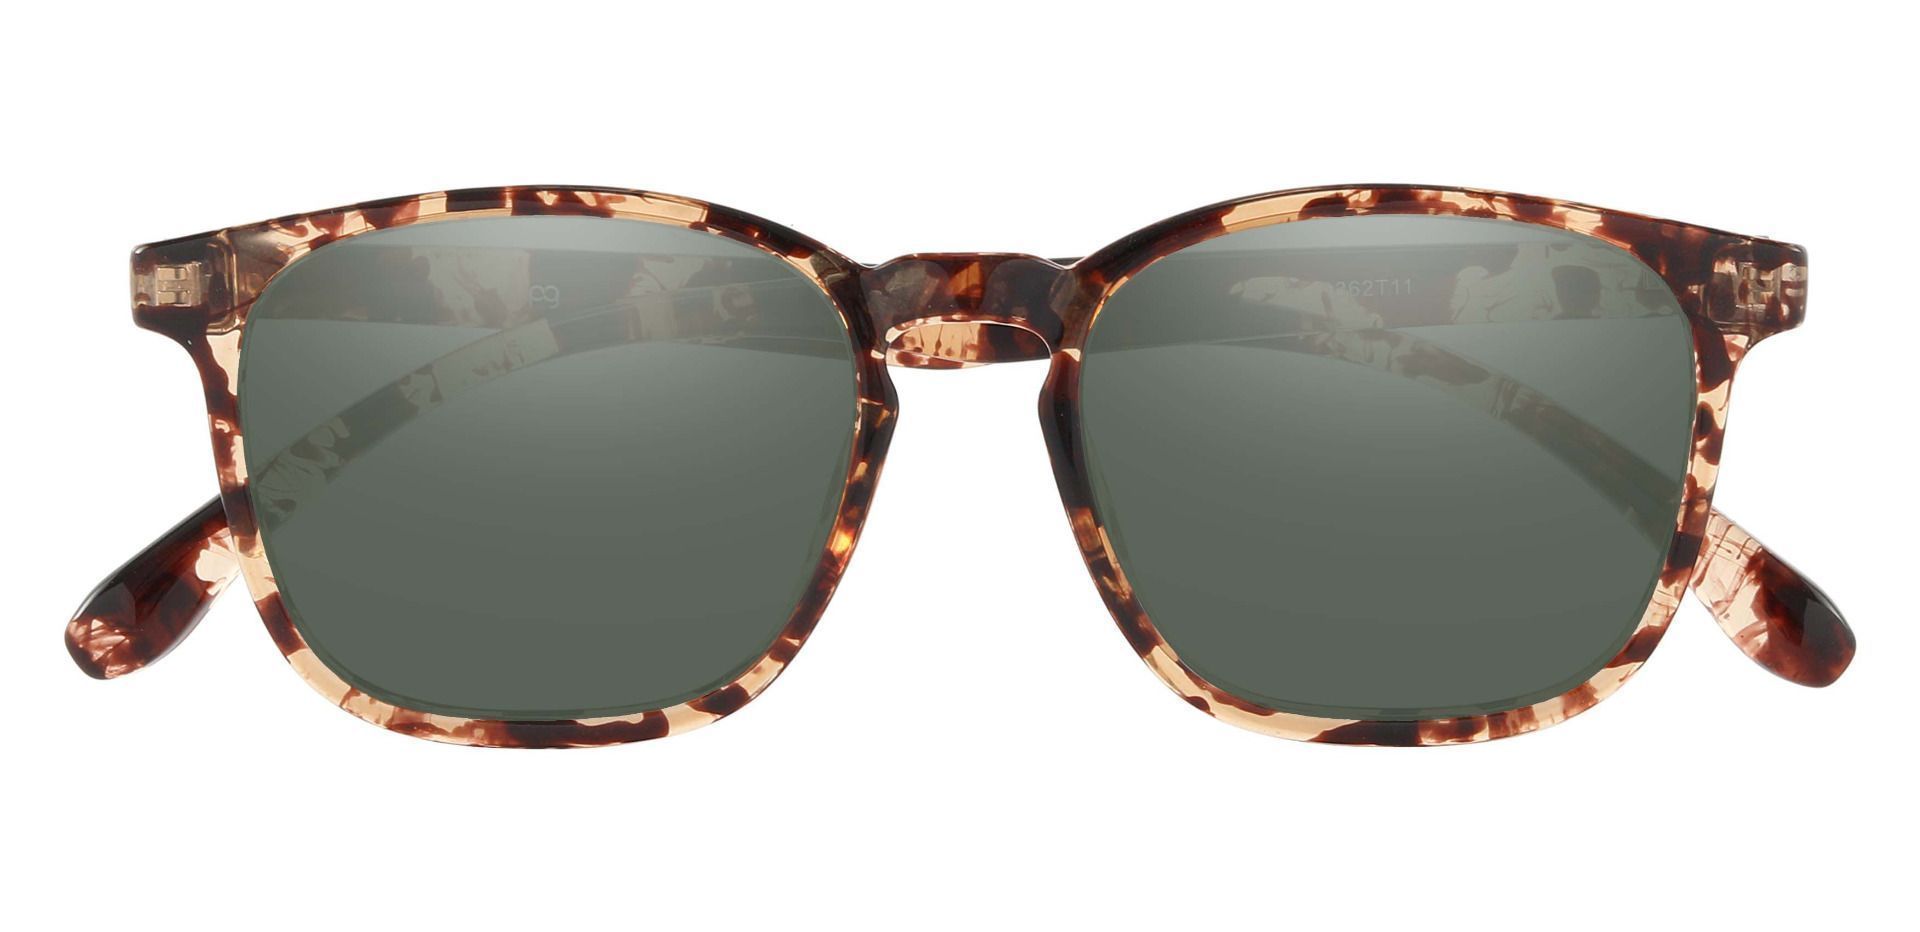 Gateway Square Prescription Sunglasses - Tortoise Frame With Green Lenses